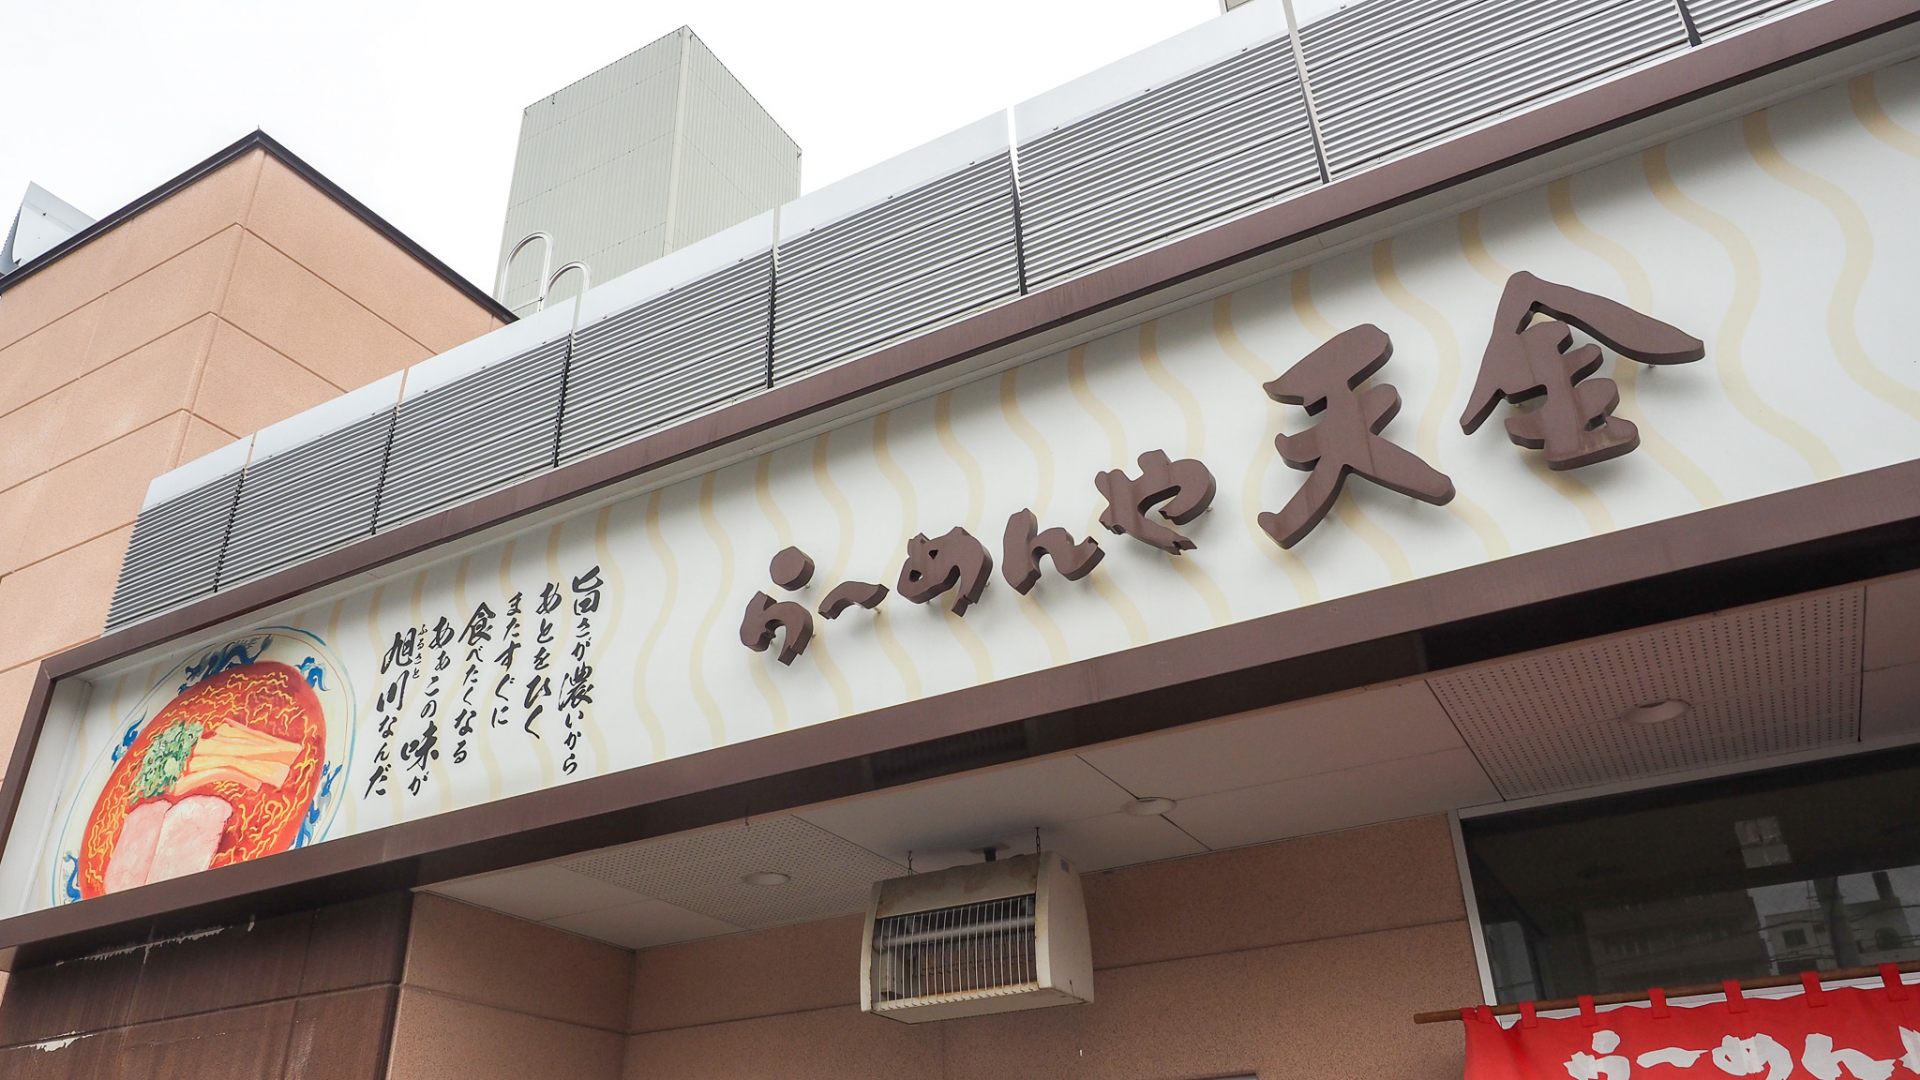 One of the well established ramen restaurant "TENKIN" in Asahikawa, Hokkaido